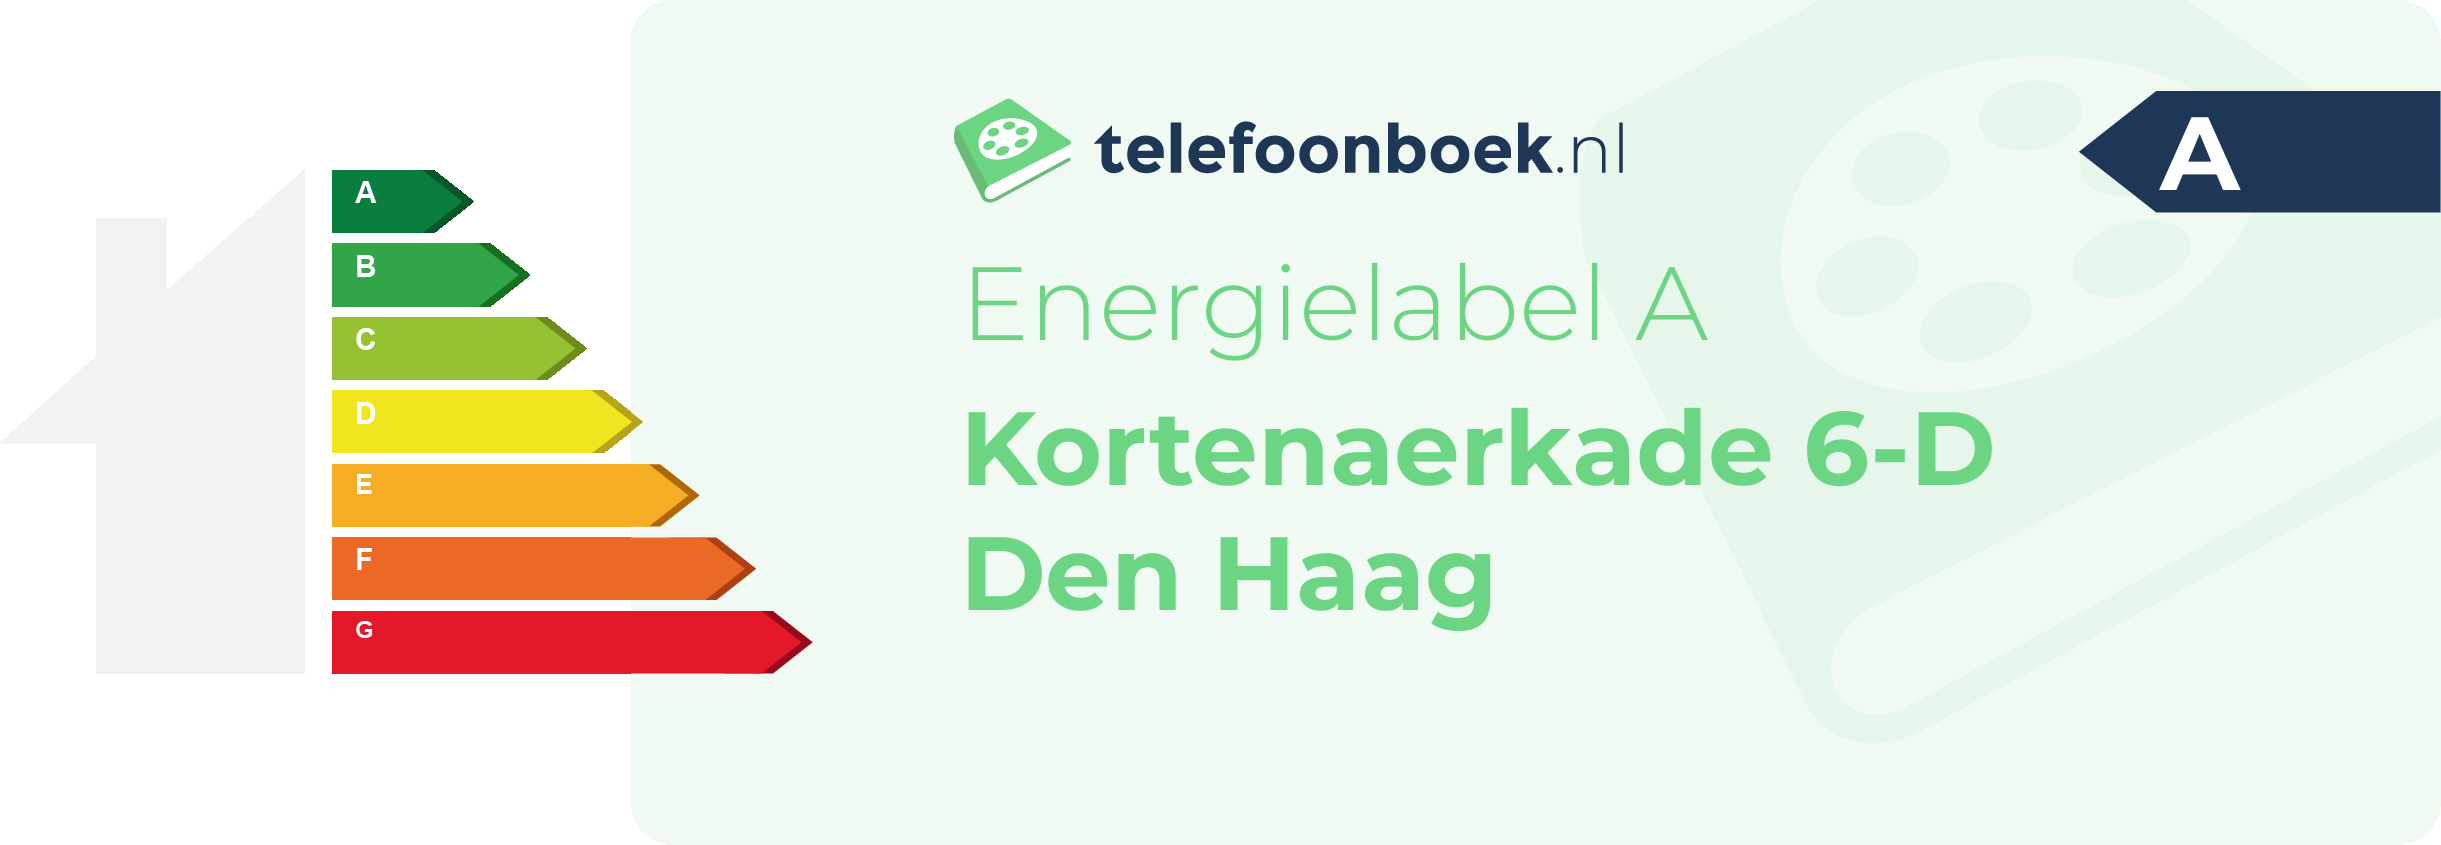 Energielabel Kortenaerkade 6-D Den Haag